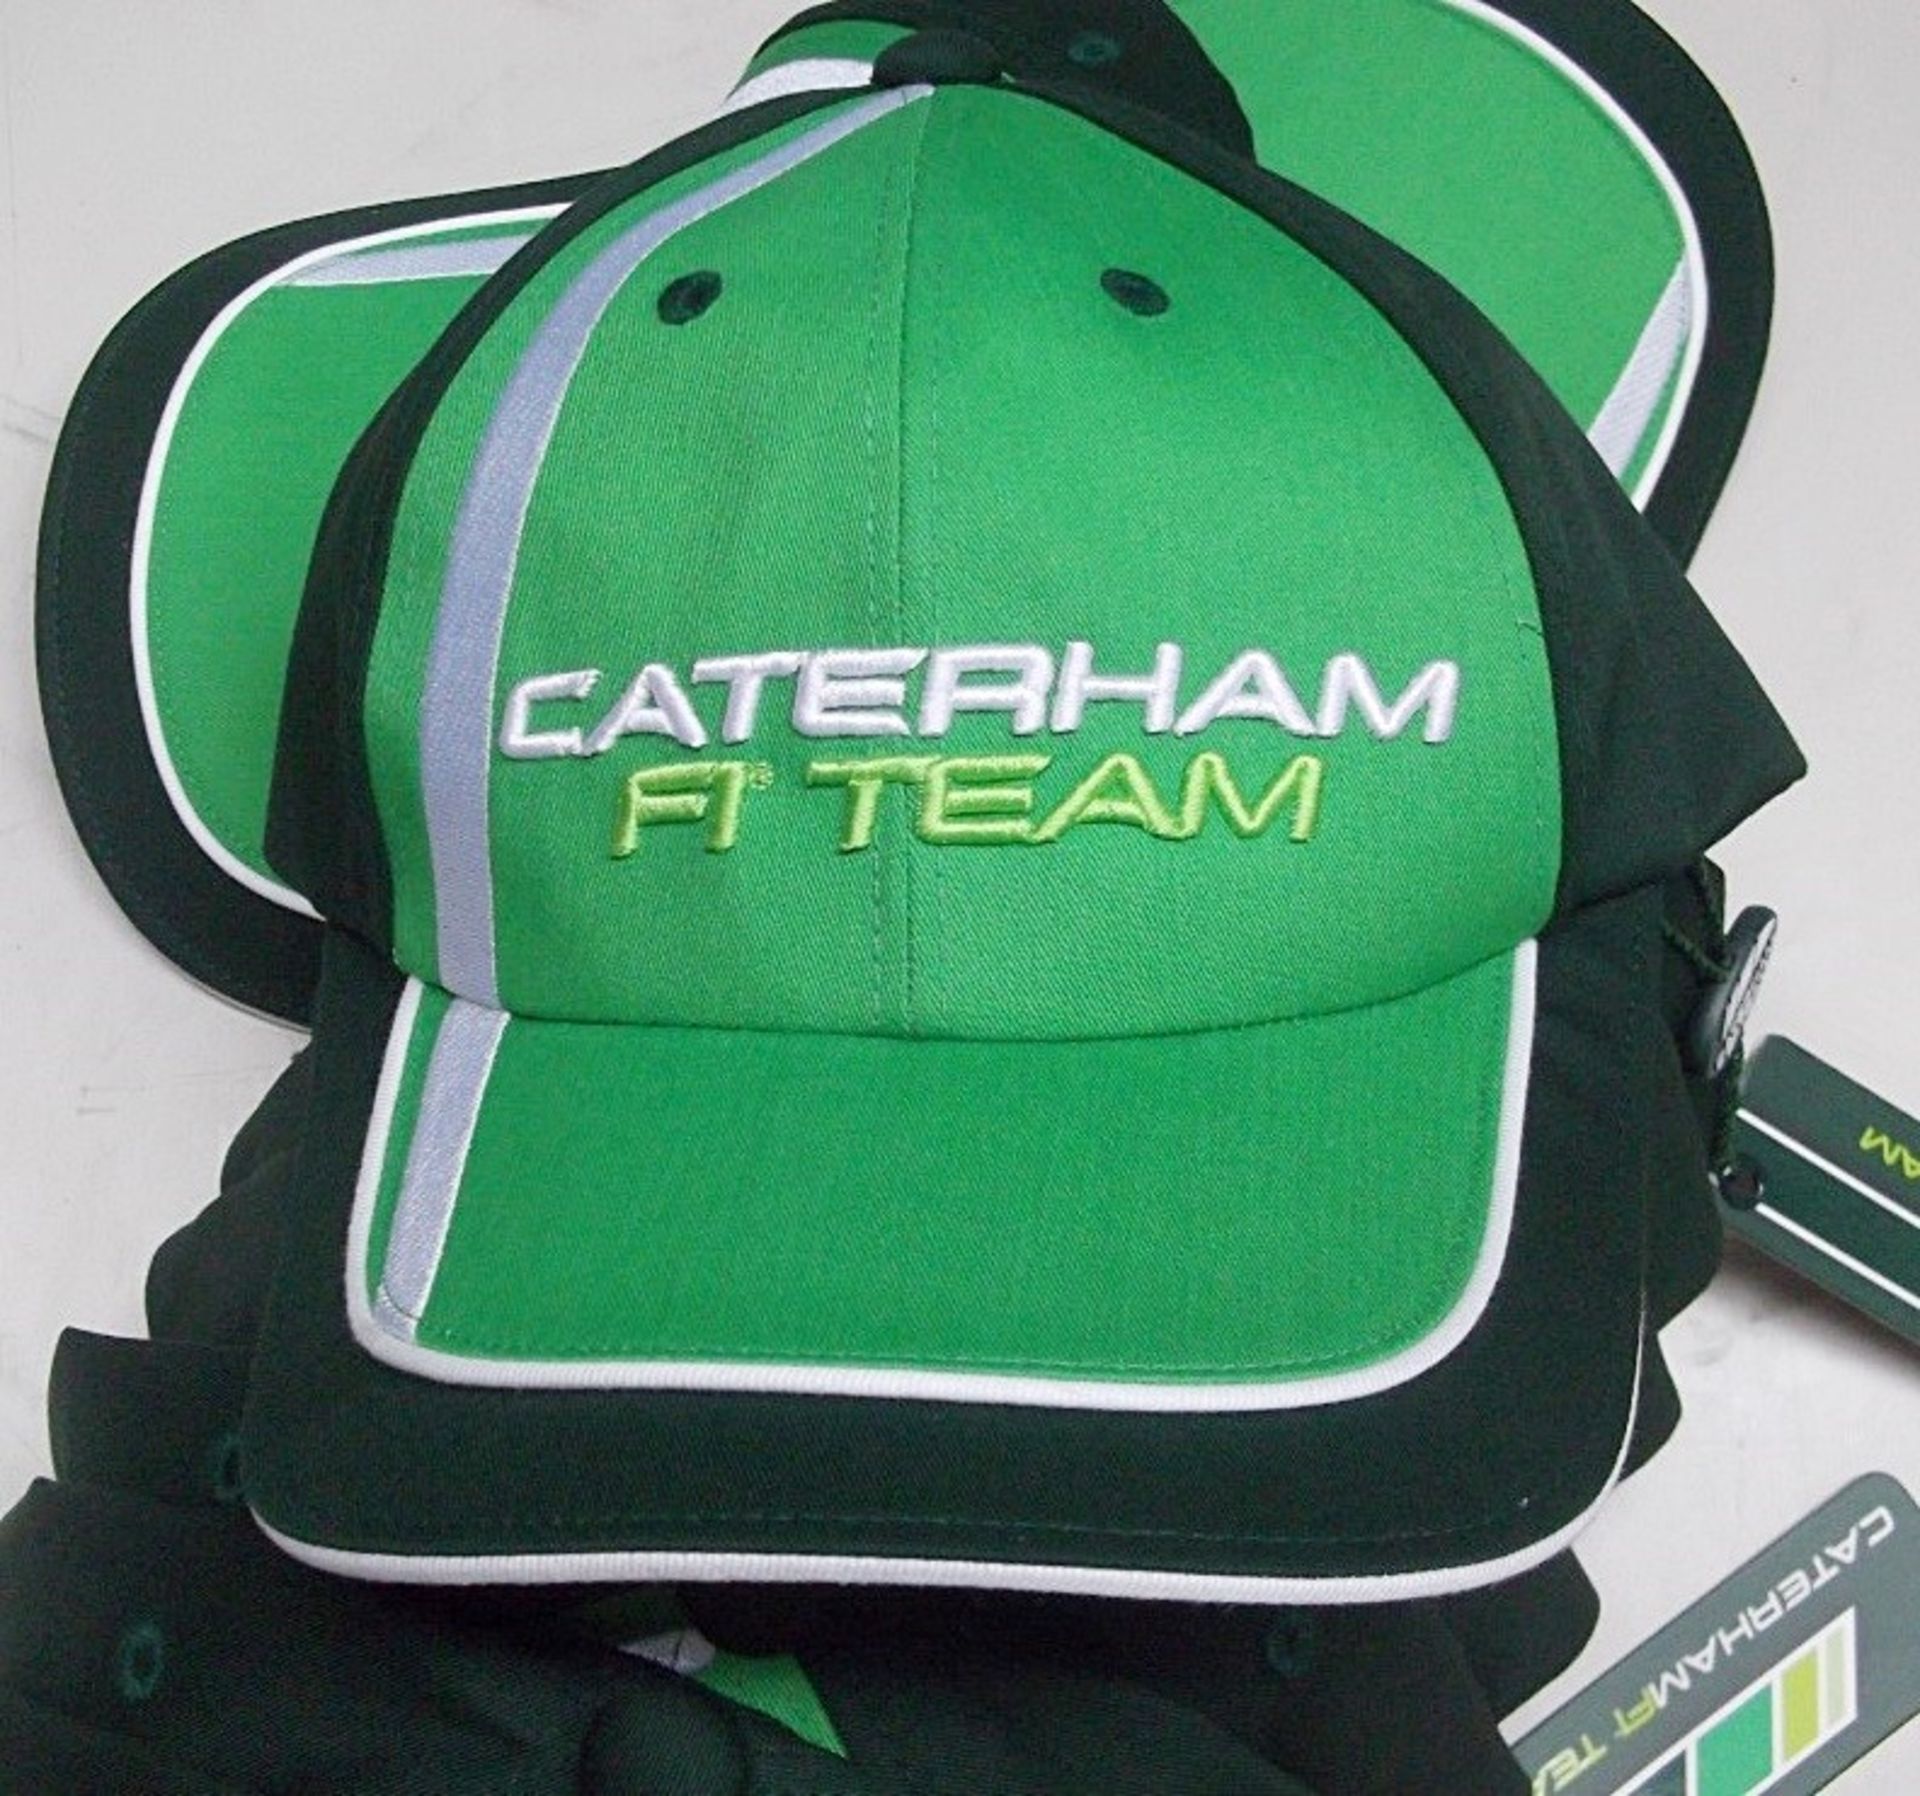 12 x CATERHAM F1 Team Caps - CL155 - Ref: JIM078 - Location: Altrincham WA14 - NEW with TAGS  We